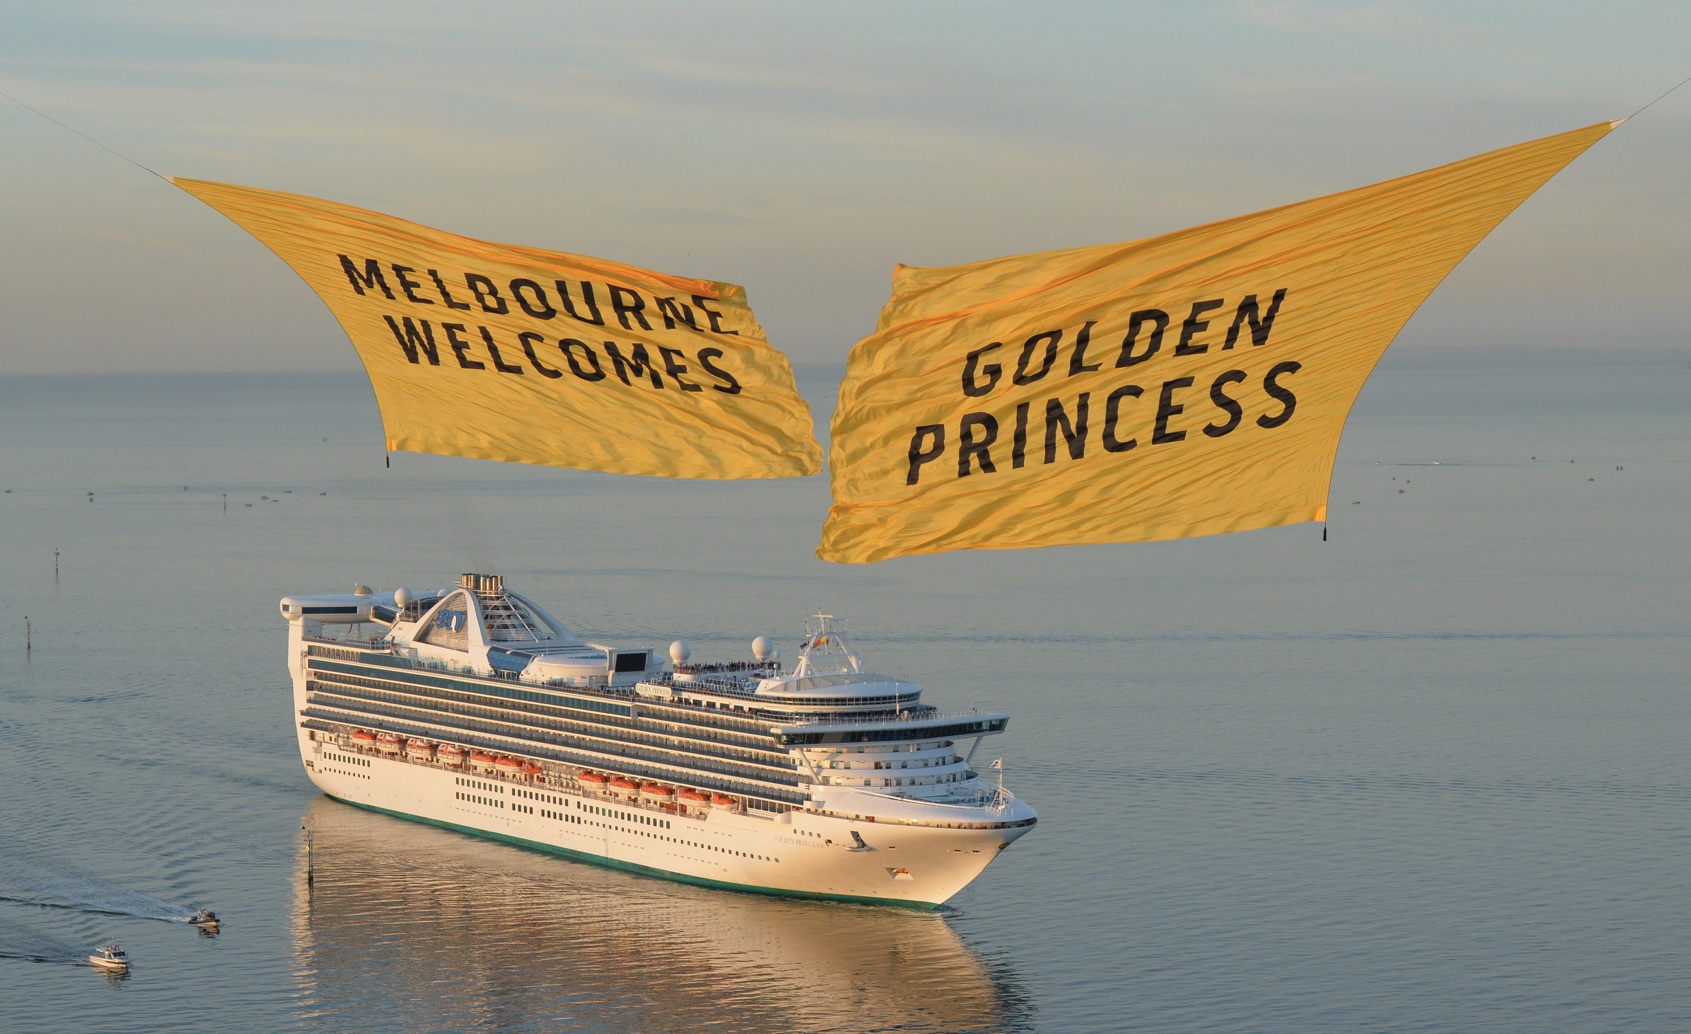 Melbourne Welcomes Golden Princess